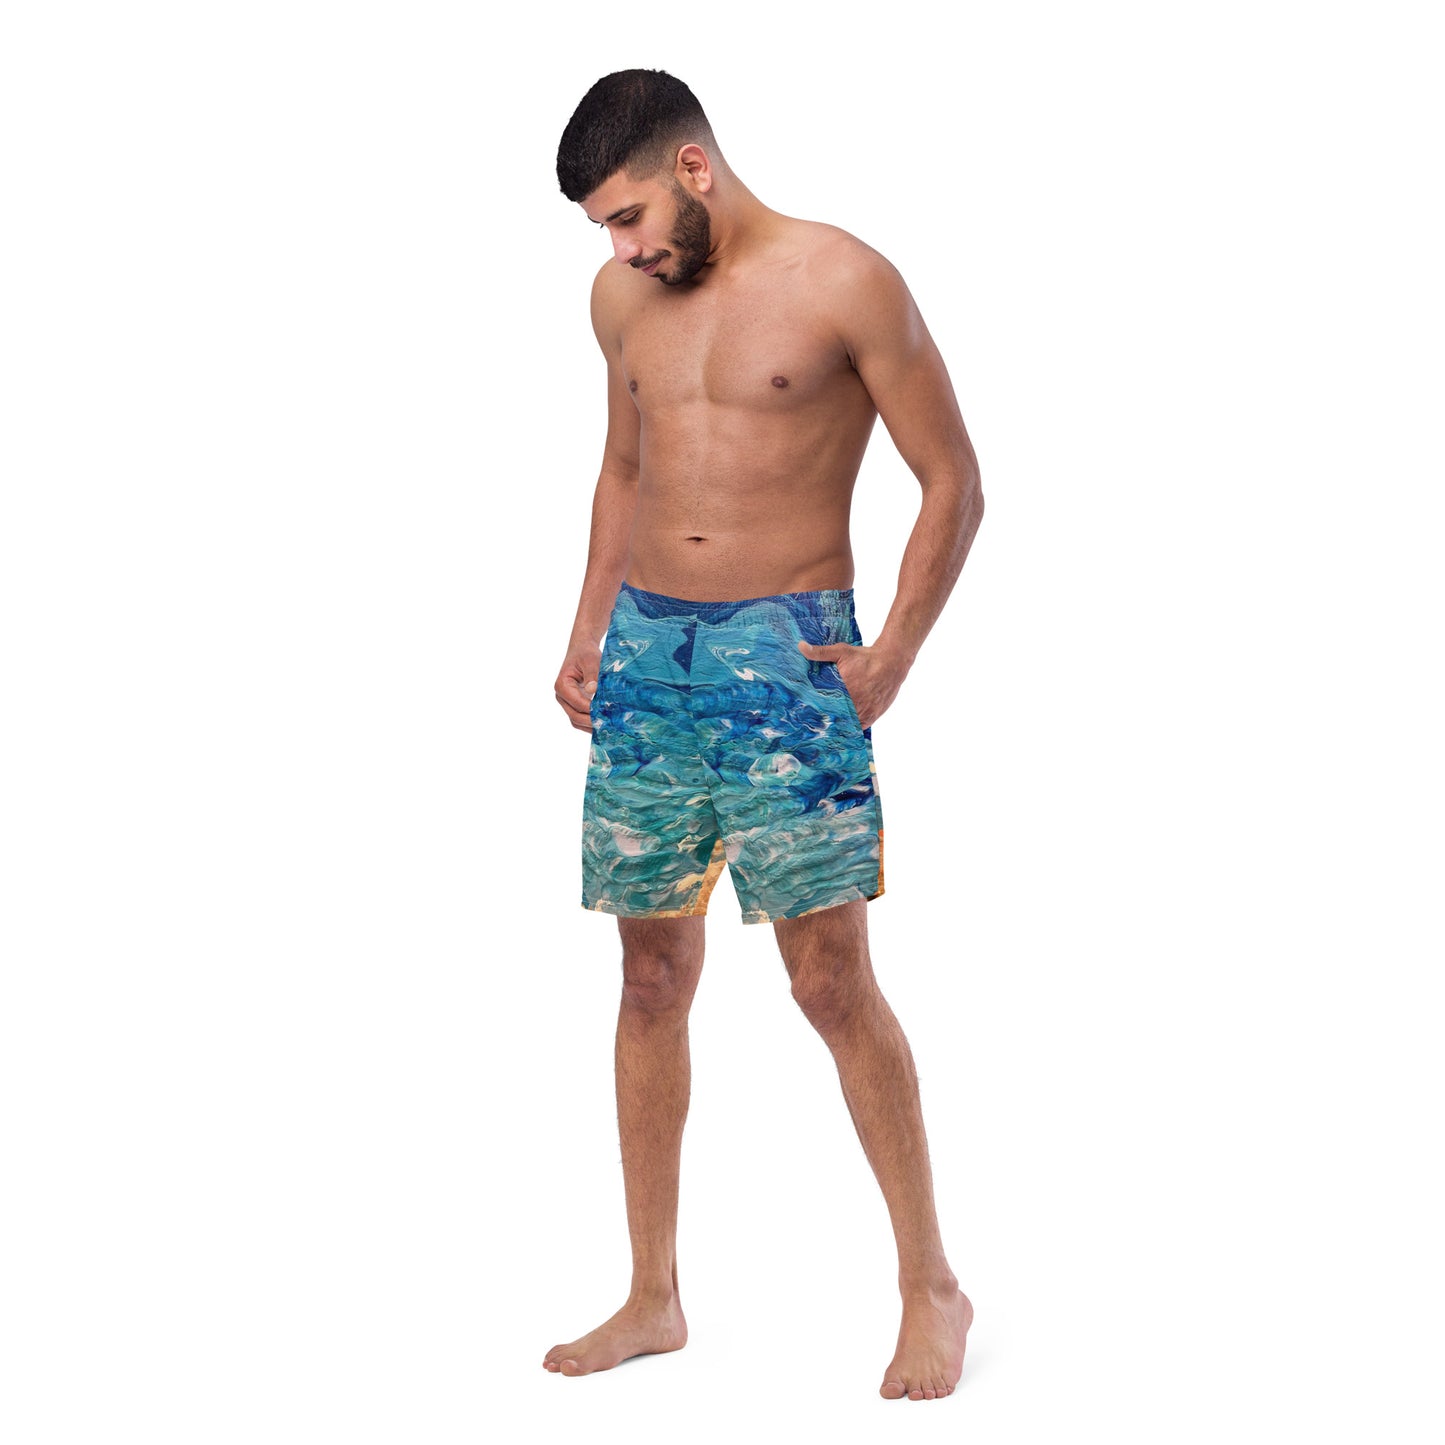 Pebble Beach Men's swim trunks